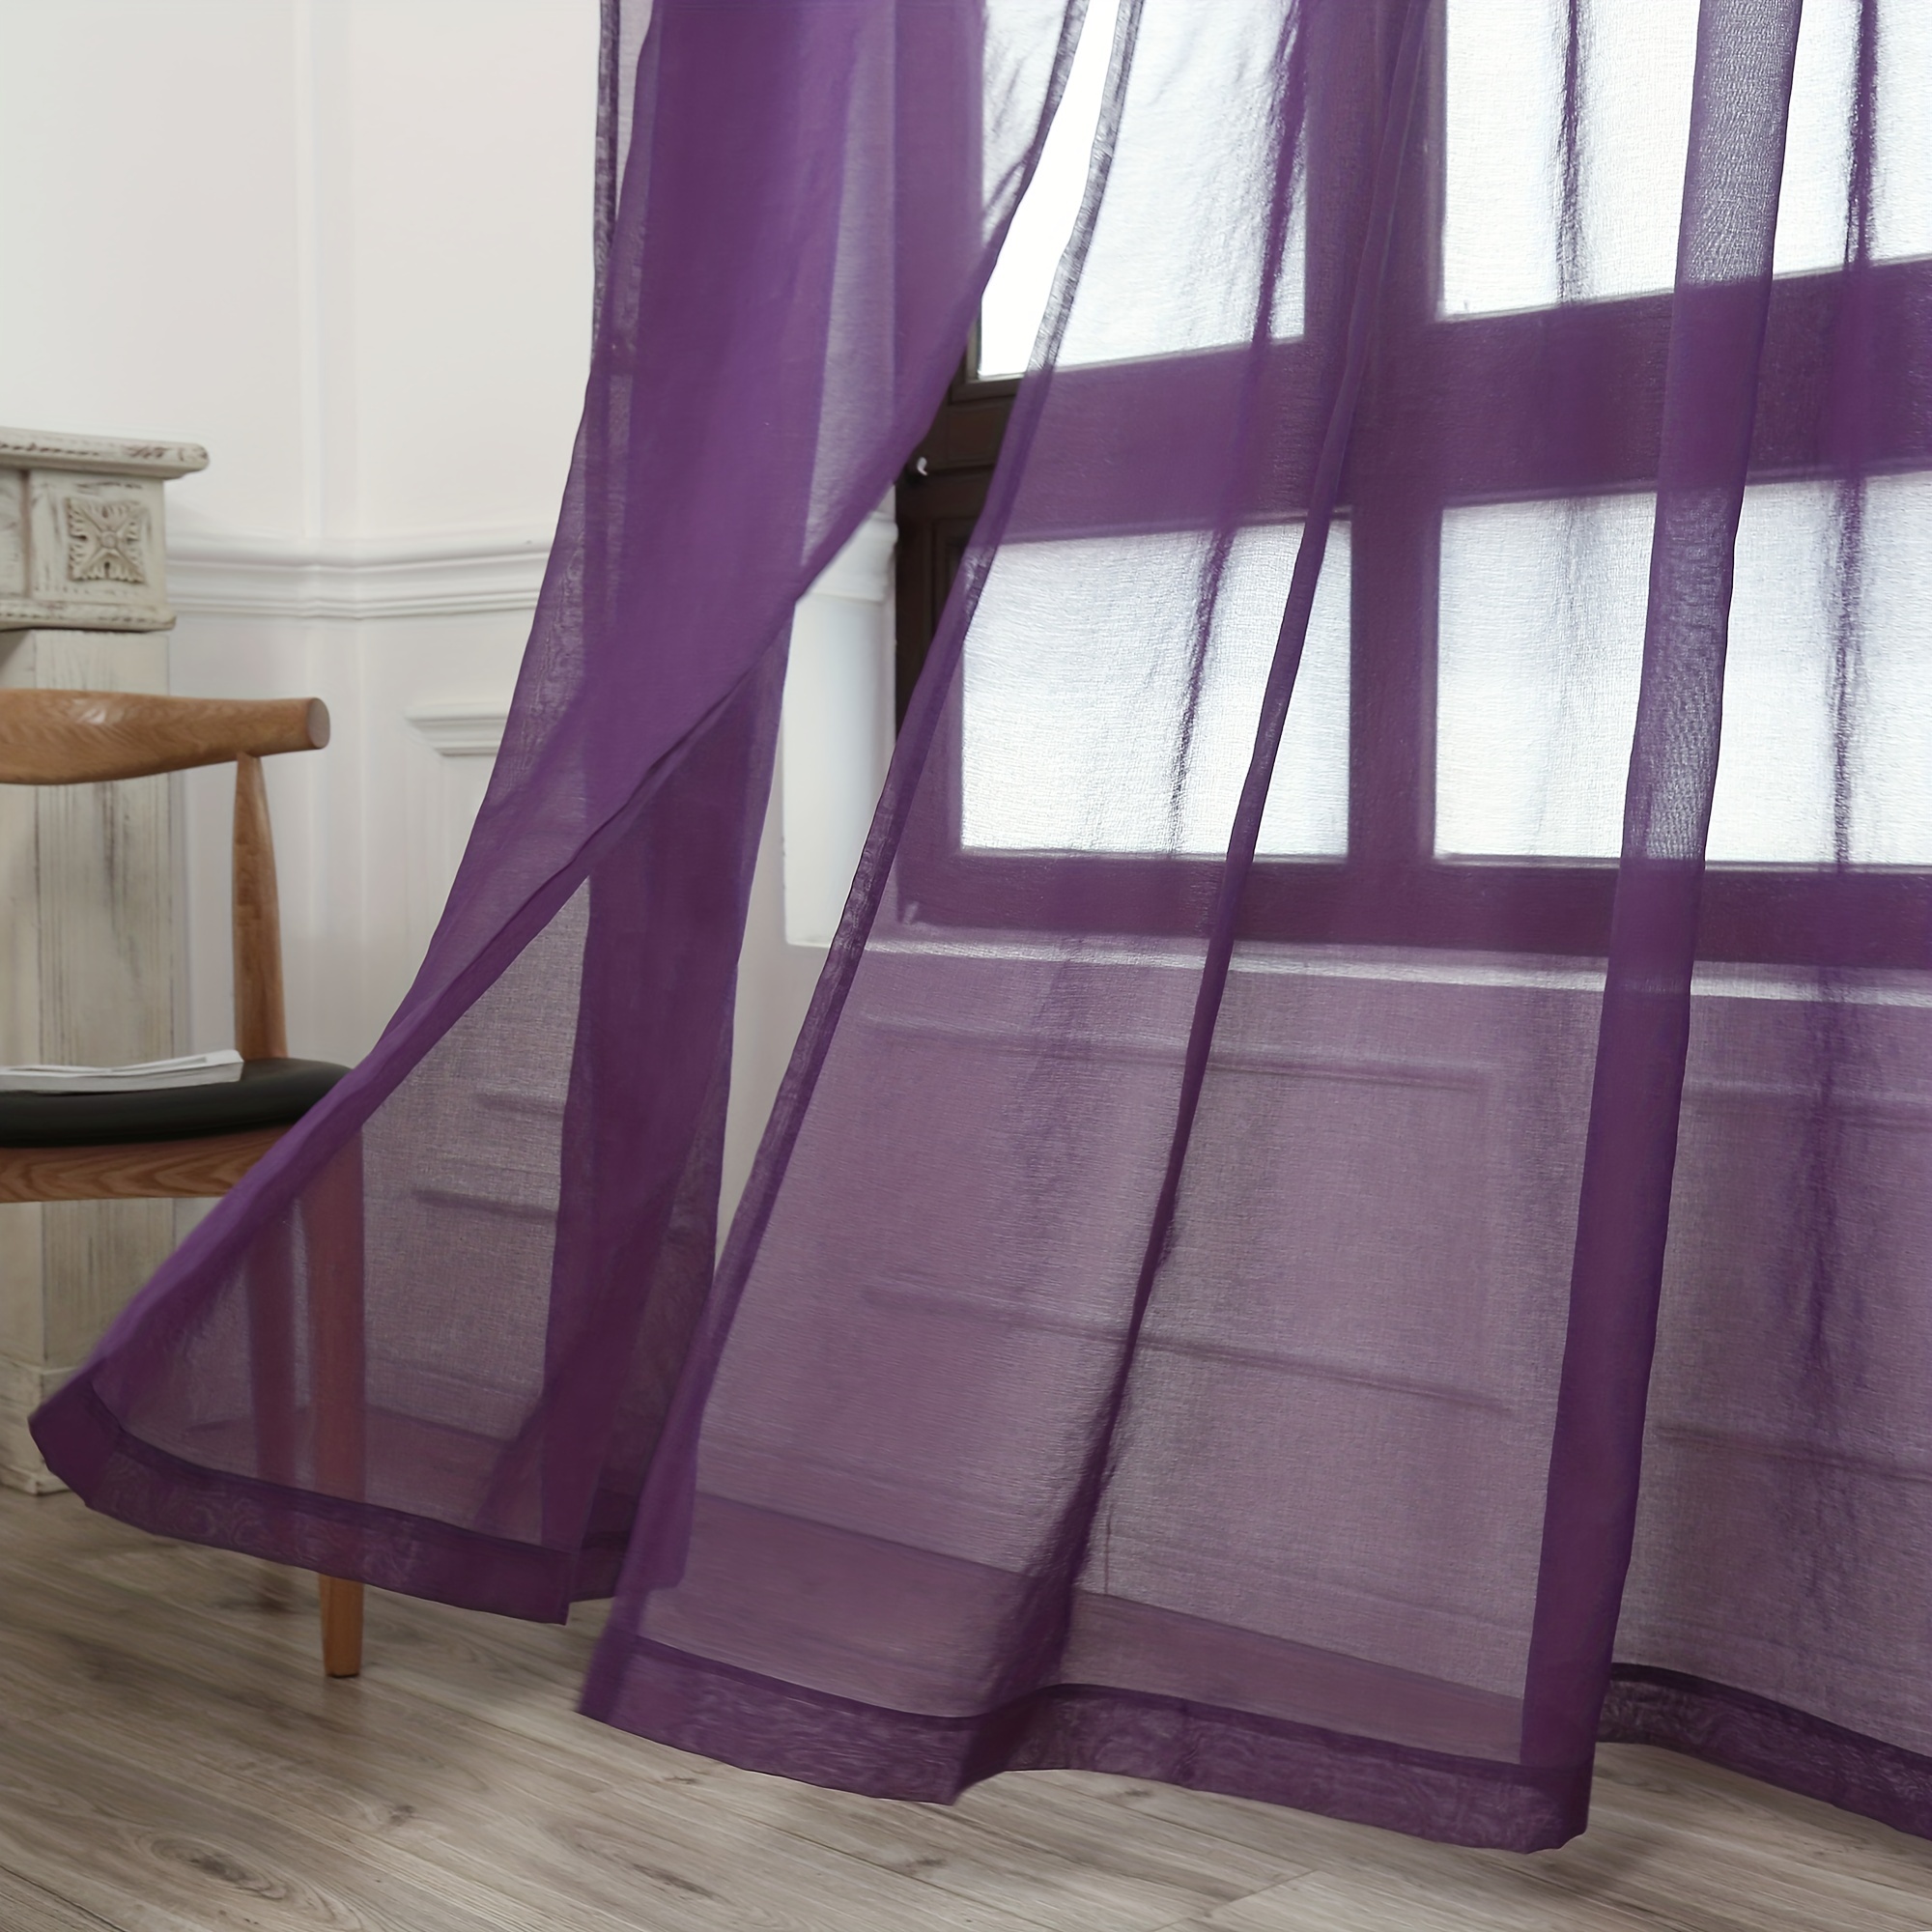 dark purple sheer curtains